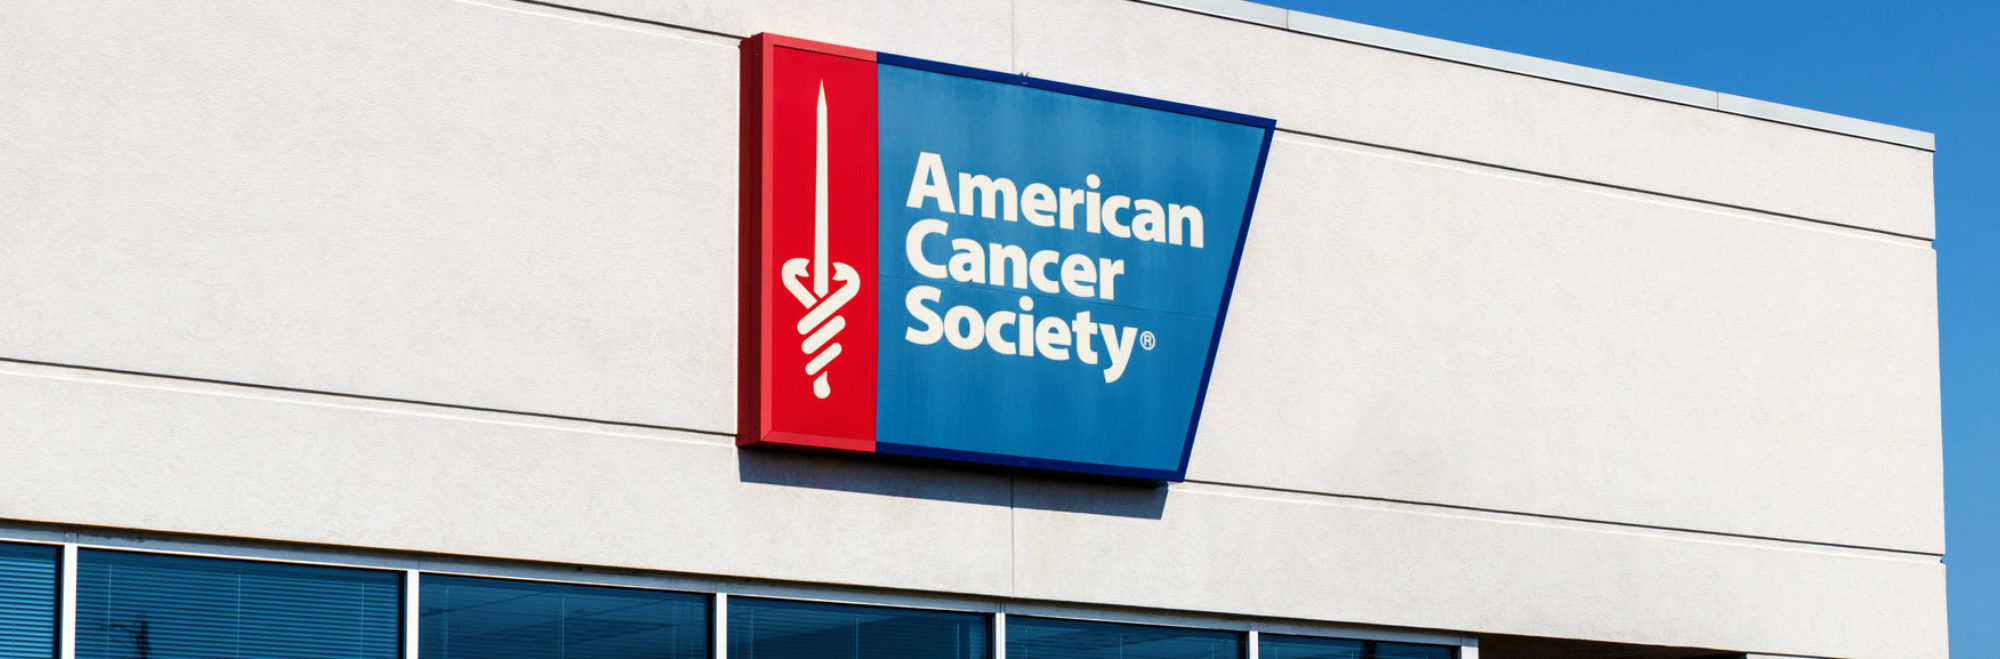 American cancer society